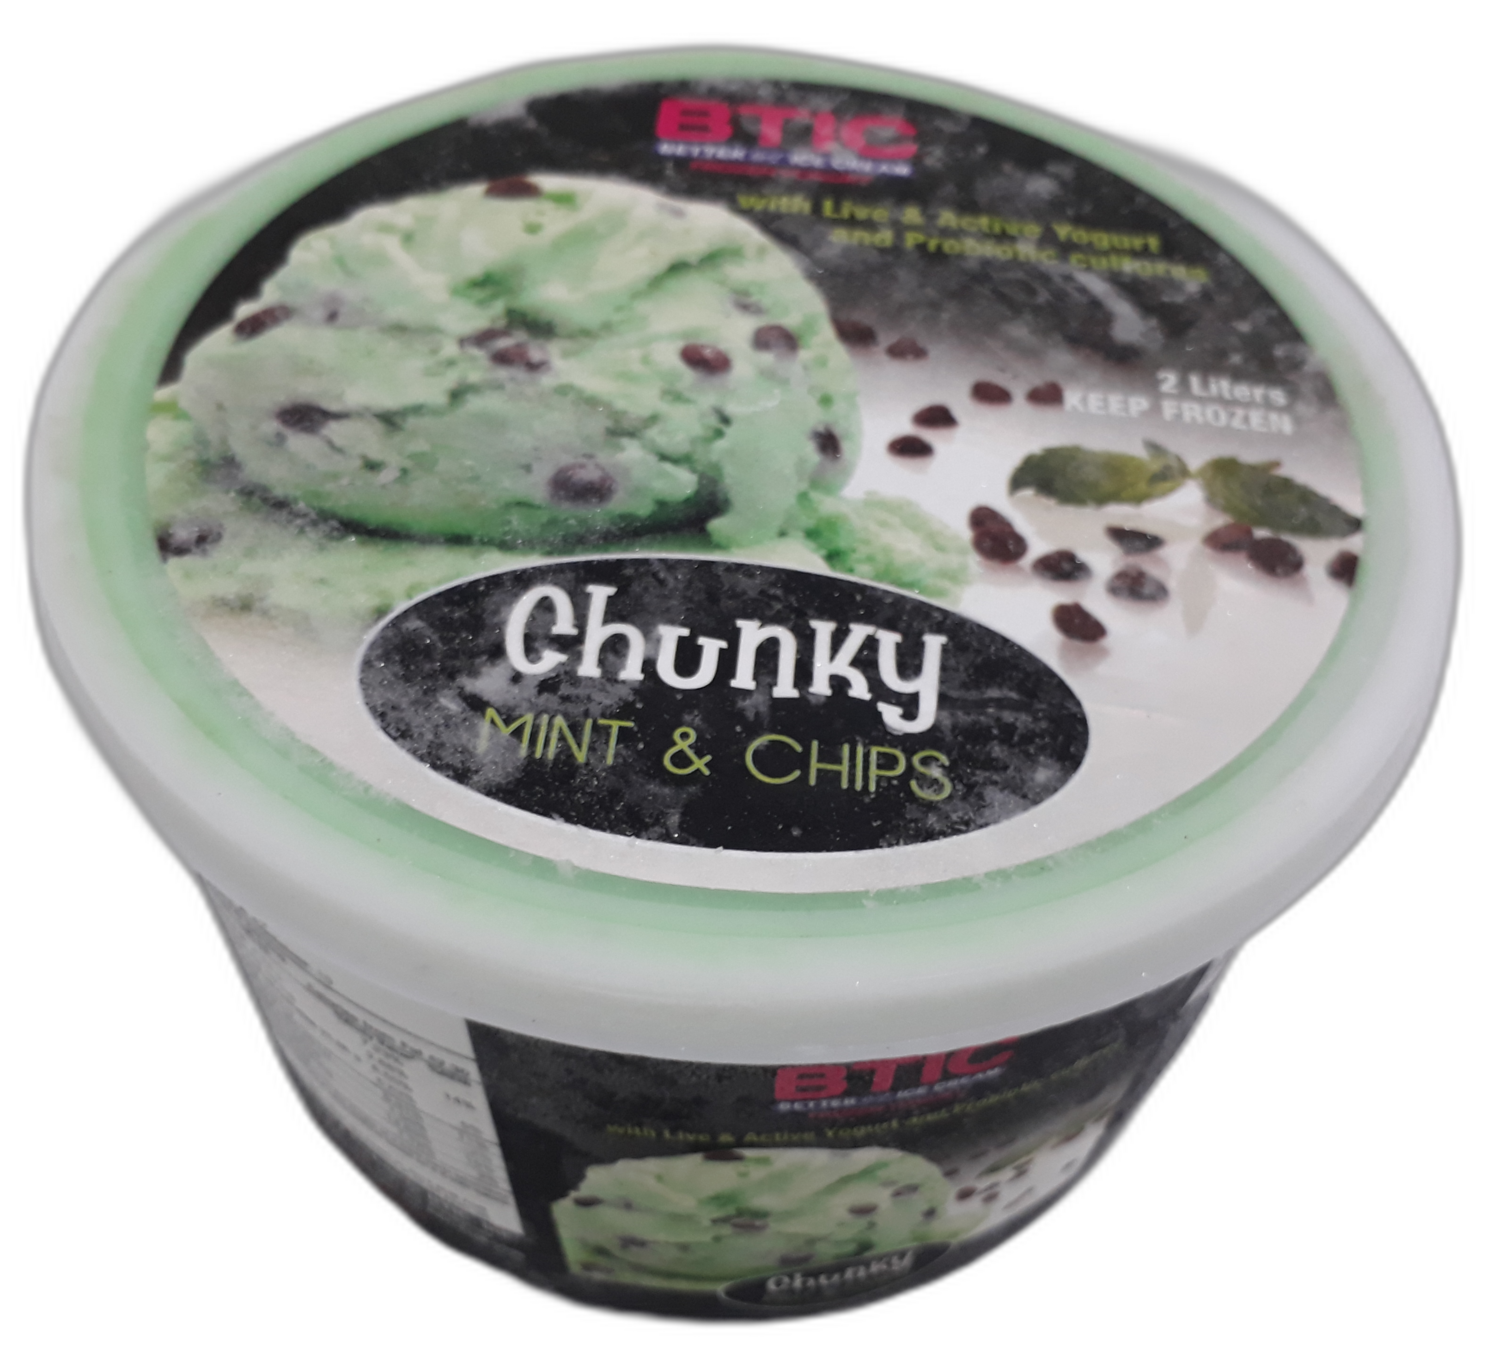 Chunky MINT N' CHIPS Yogurt Ice Cream 2 LIter